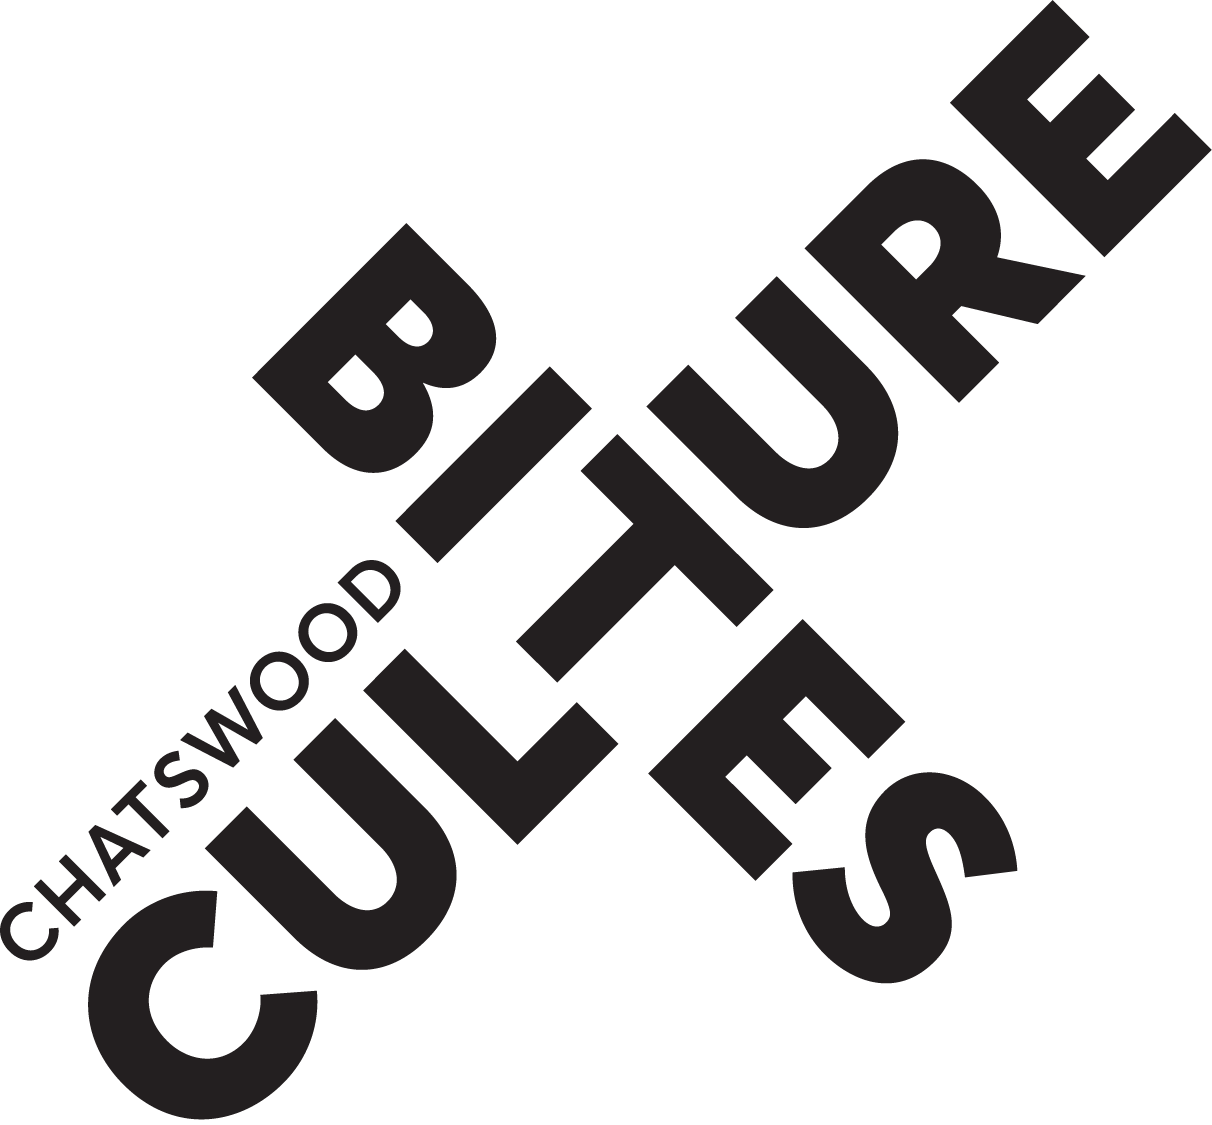 Chatswood-Culture-bites-logo.png